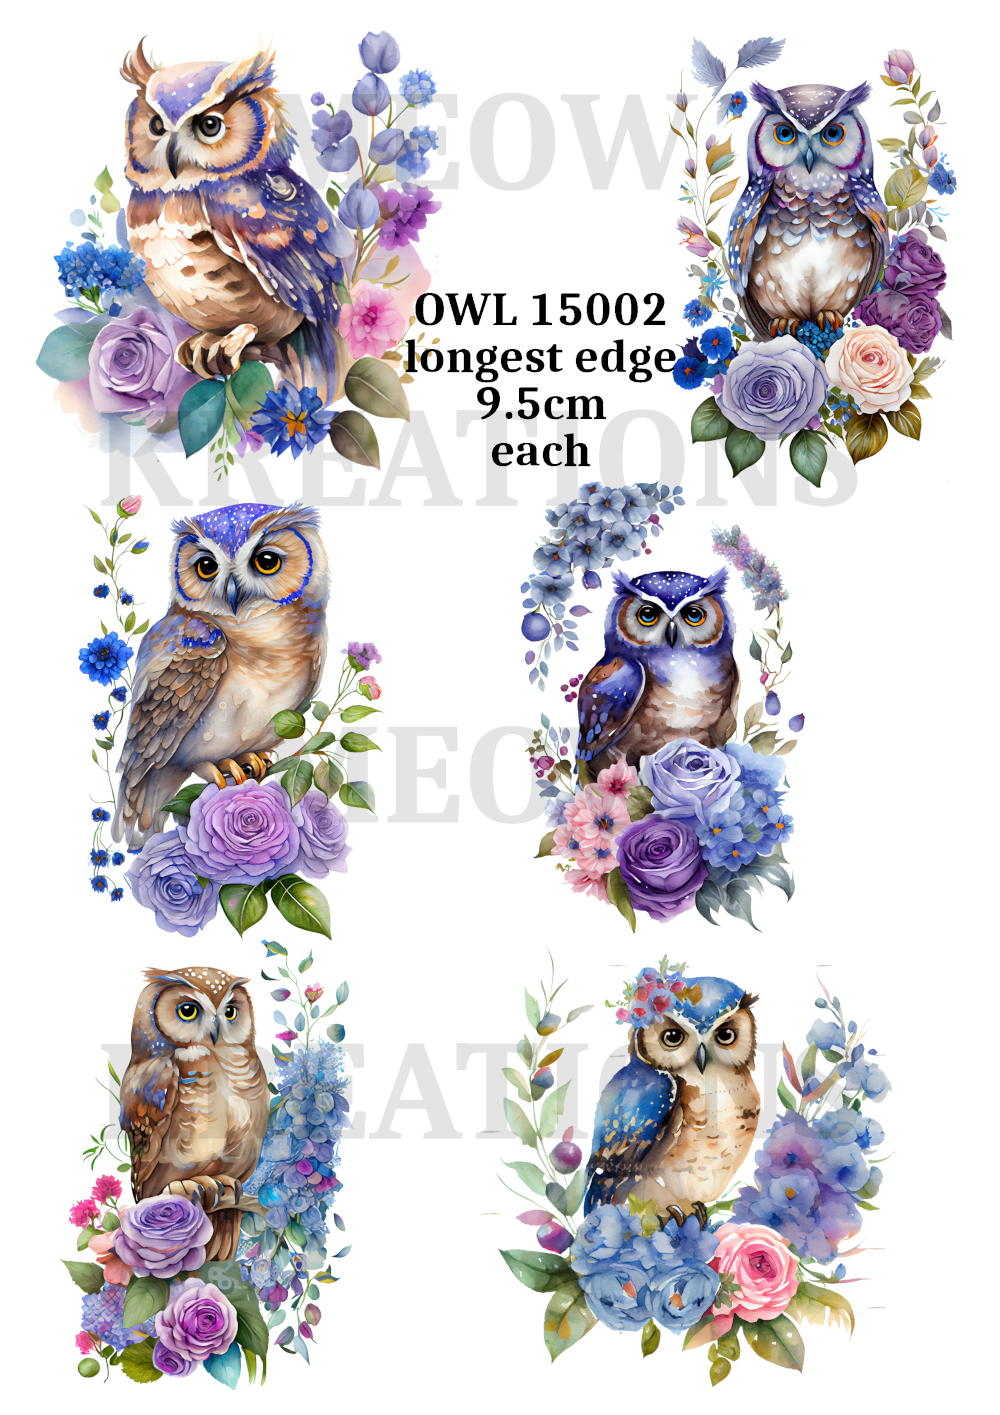 OWL 15002